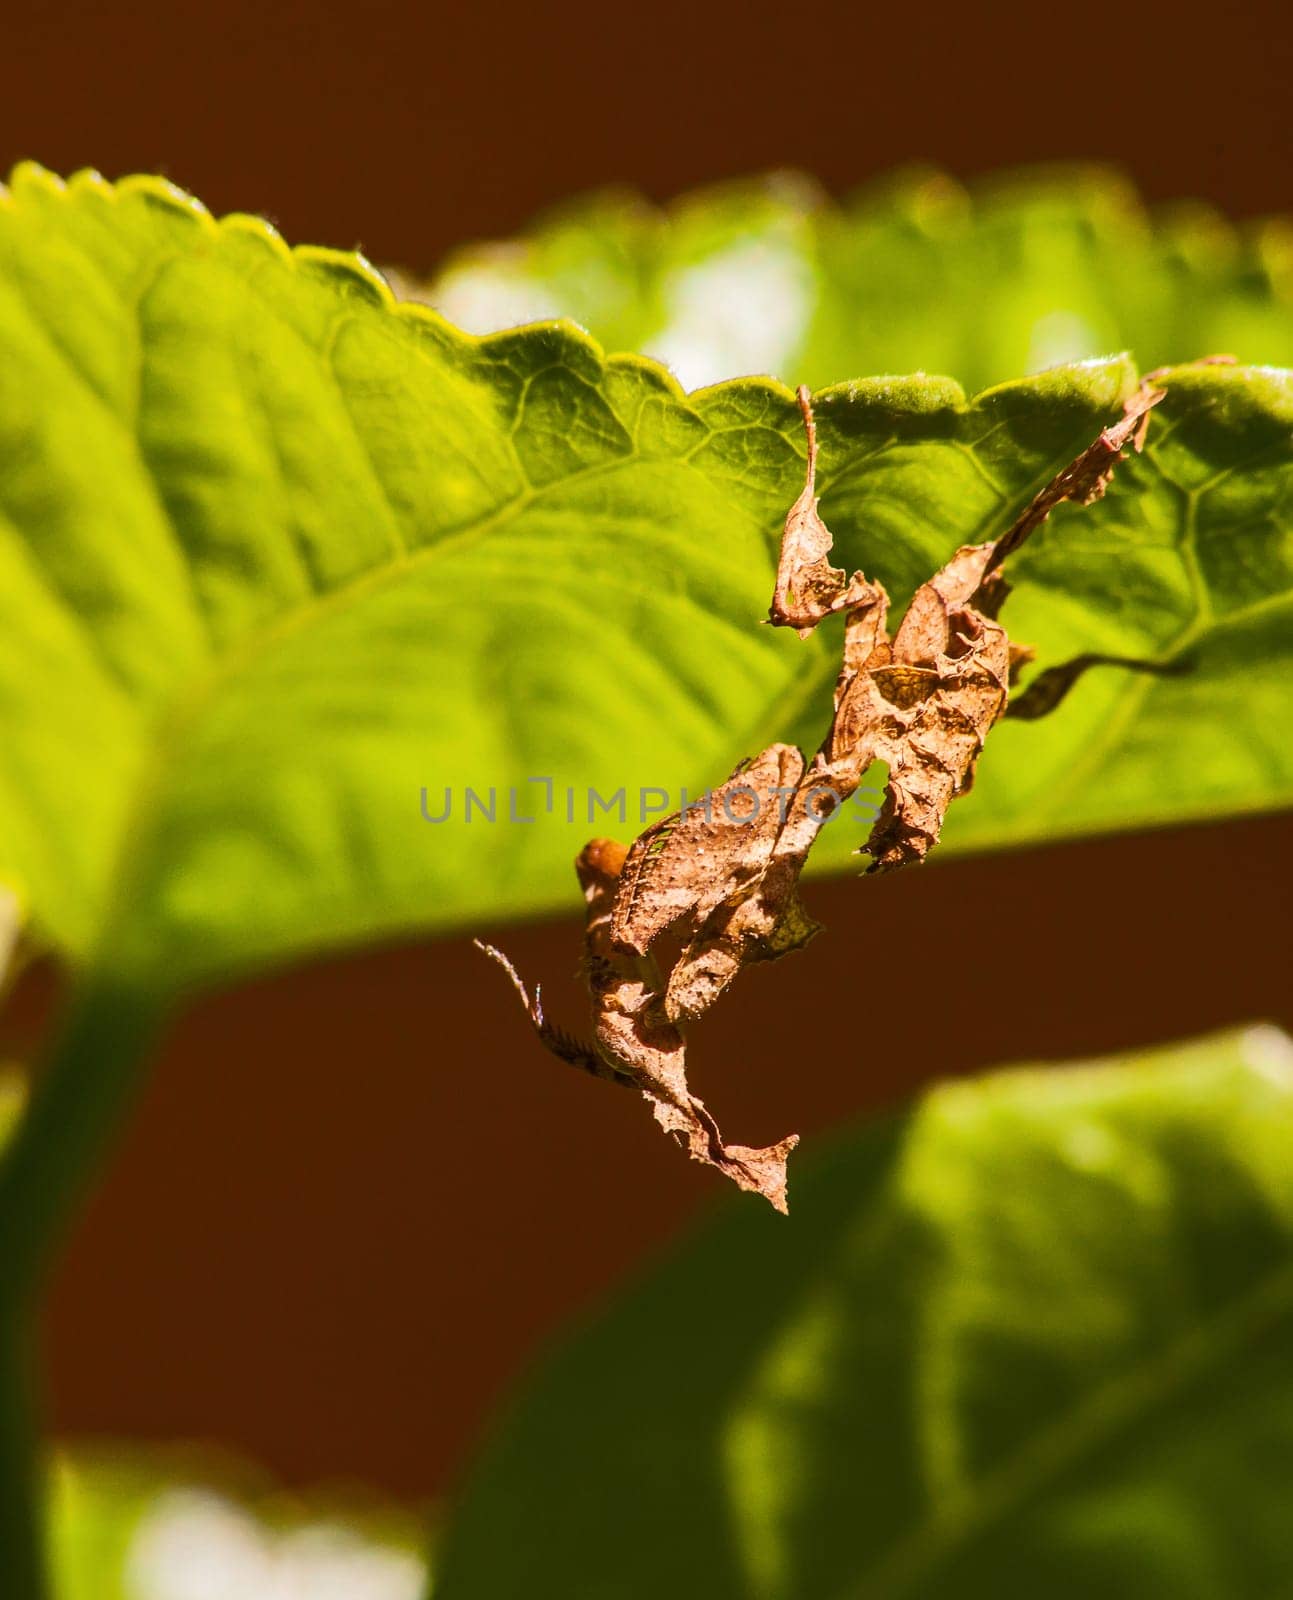 Ghost mantis (Phyllocrania paradoxa) 13367 by kobus_peche